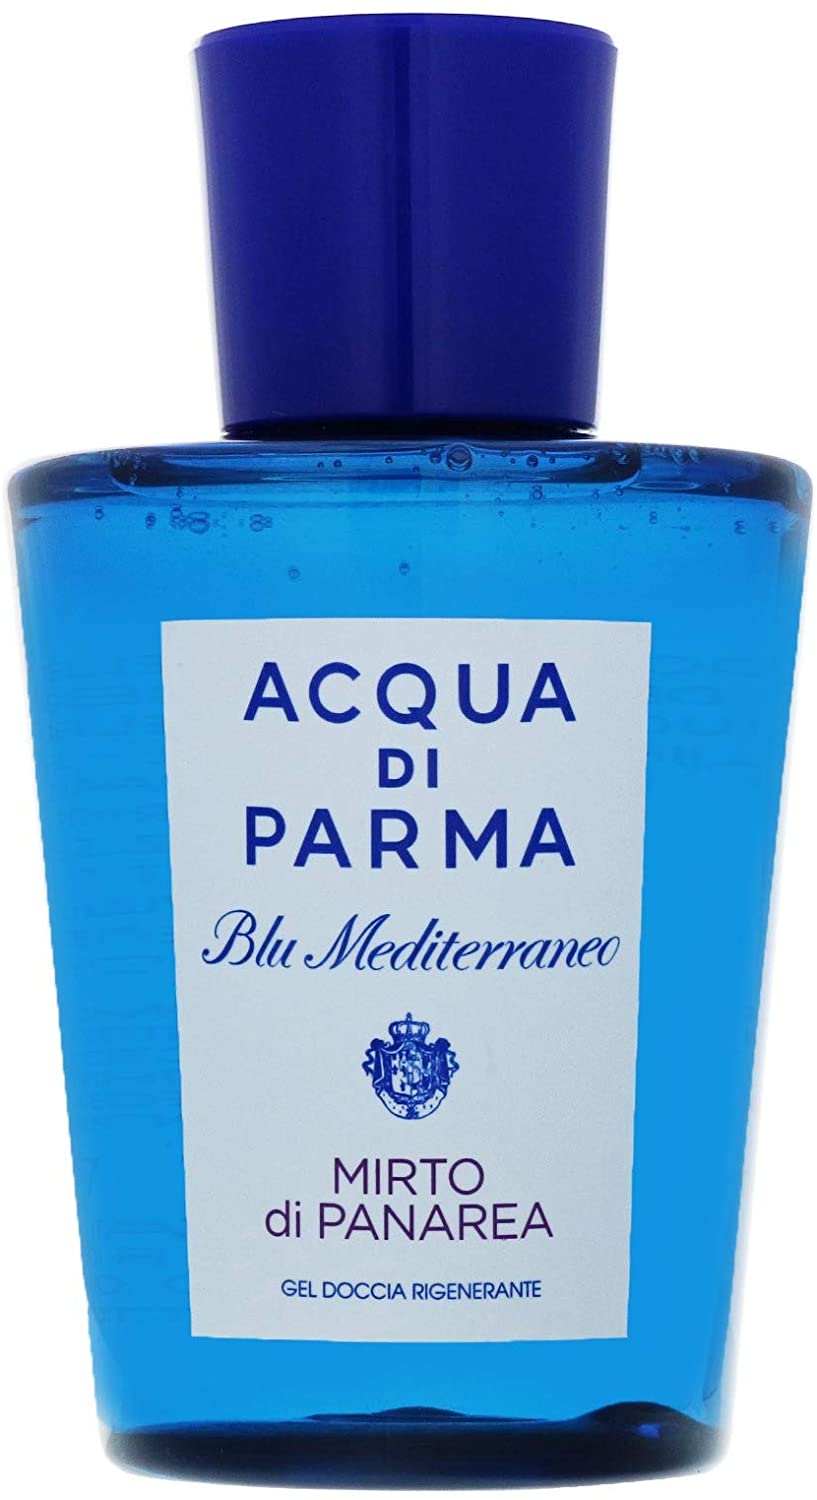 Acqua di Parma Blu Mediterraneo Mirto di Panarea Regenerating Shower Gel 200ml